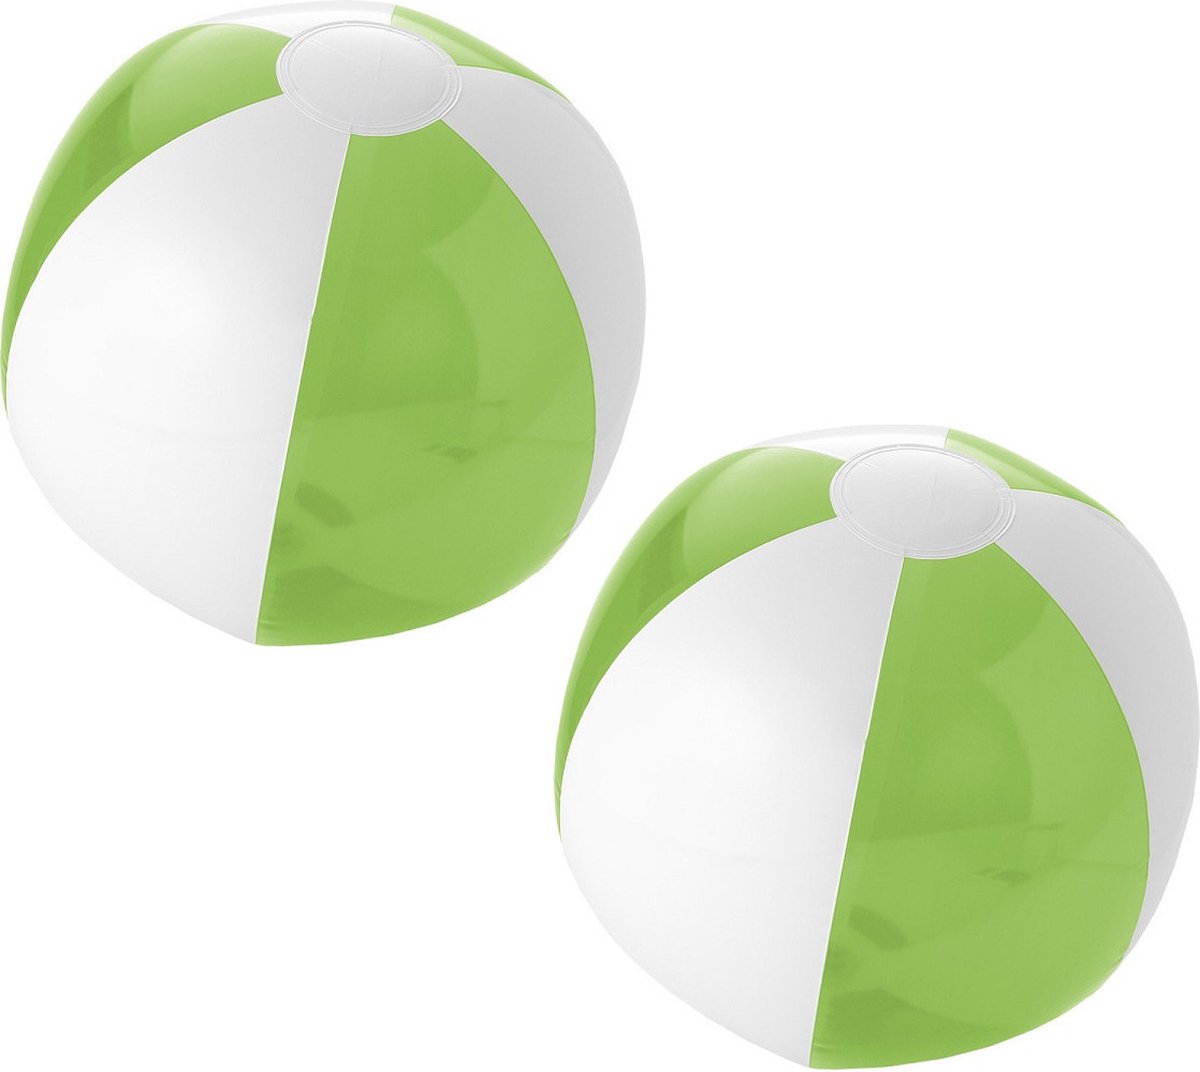 5x stuks opblaasbare strandballen groen/wit 30 cm - Buitenspeelgoed waterspeelgoed opblaasbaar